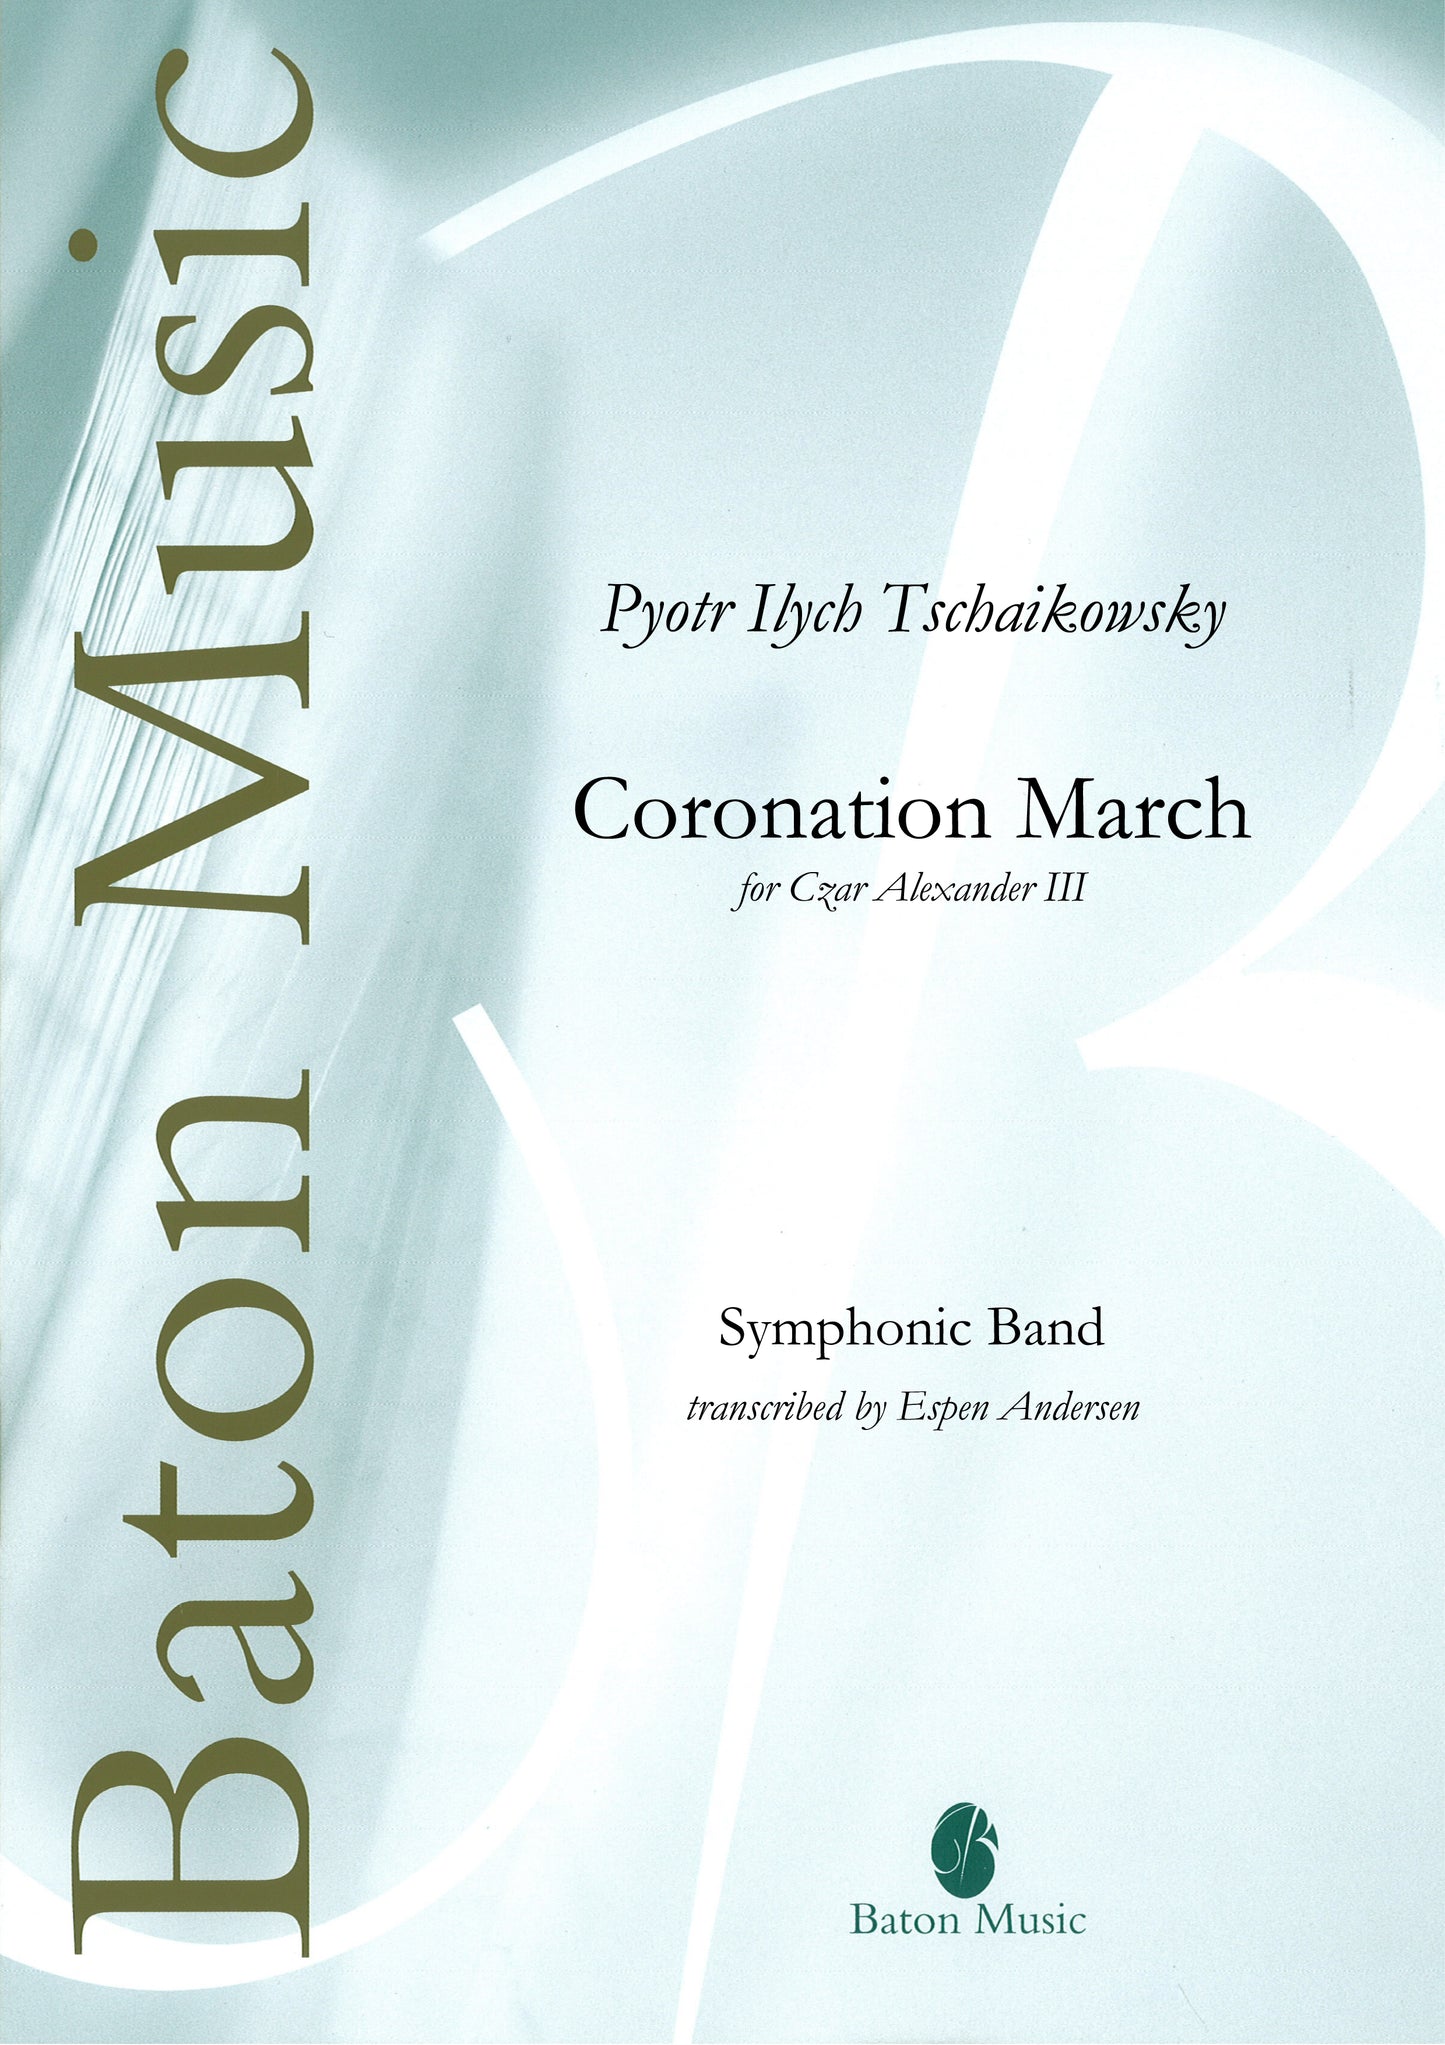 Coronation March (for Czar Alexander III) - Tchaikovsky